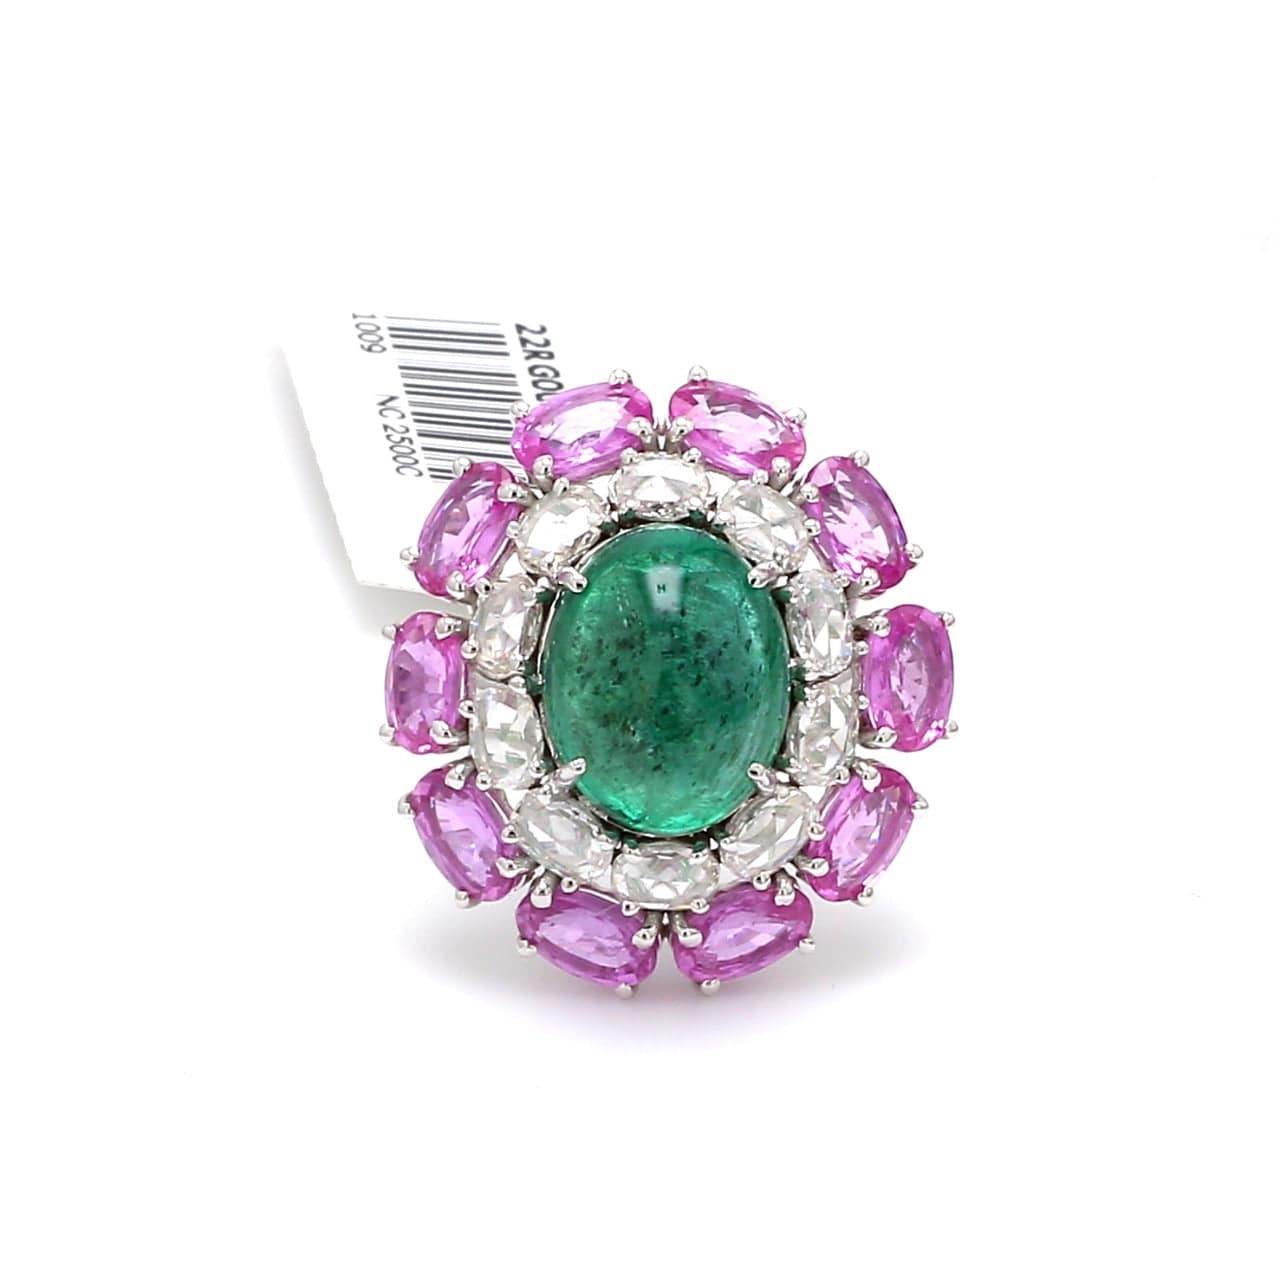 Buy Unique American Diamond Emerald Stone Ring Design Online